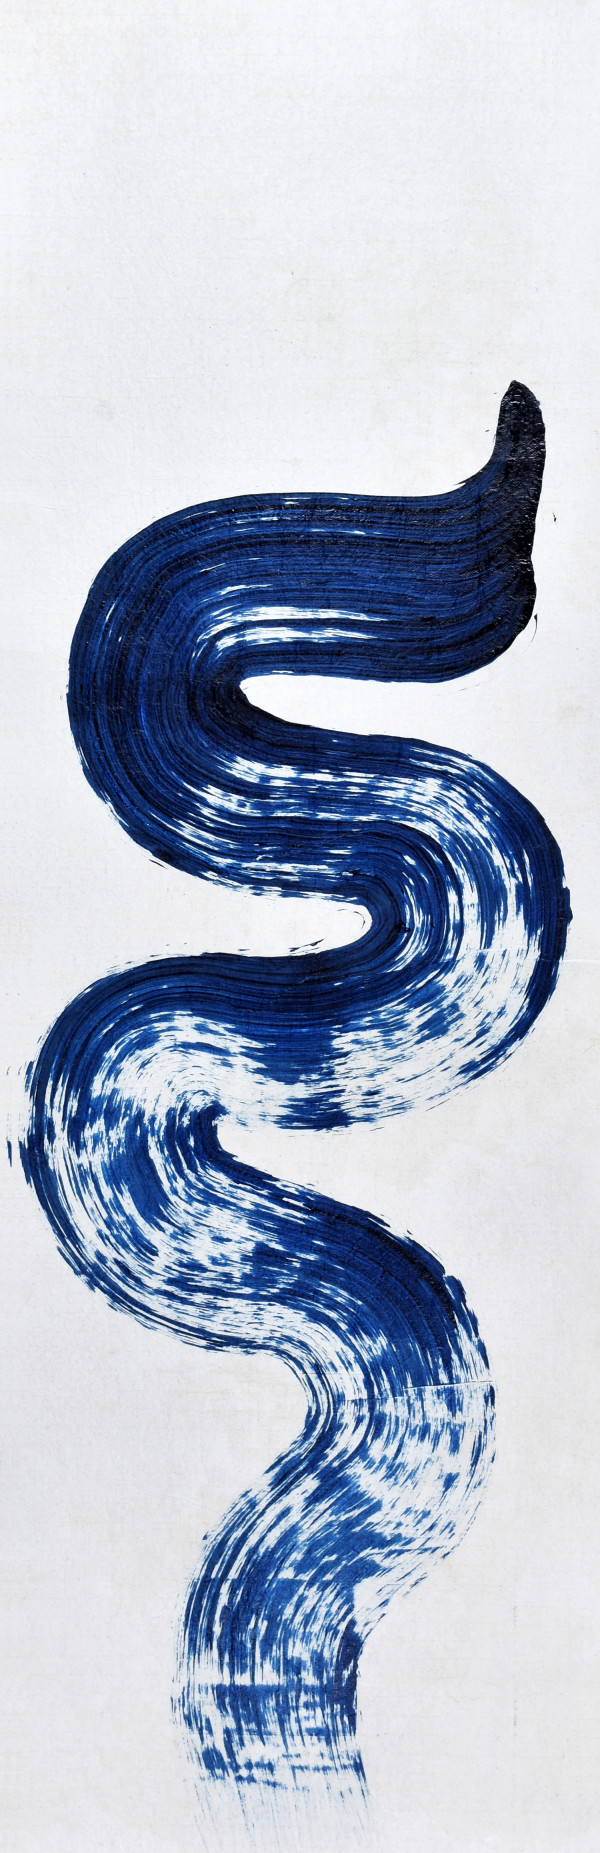 Blue Dragon in the Sky 01 by Yeachin Tsai